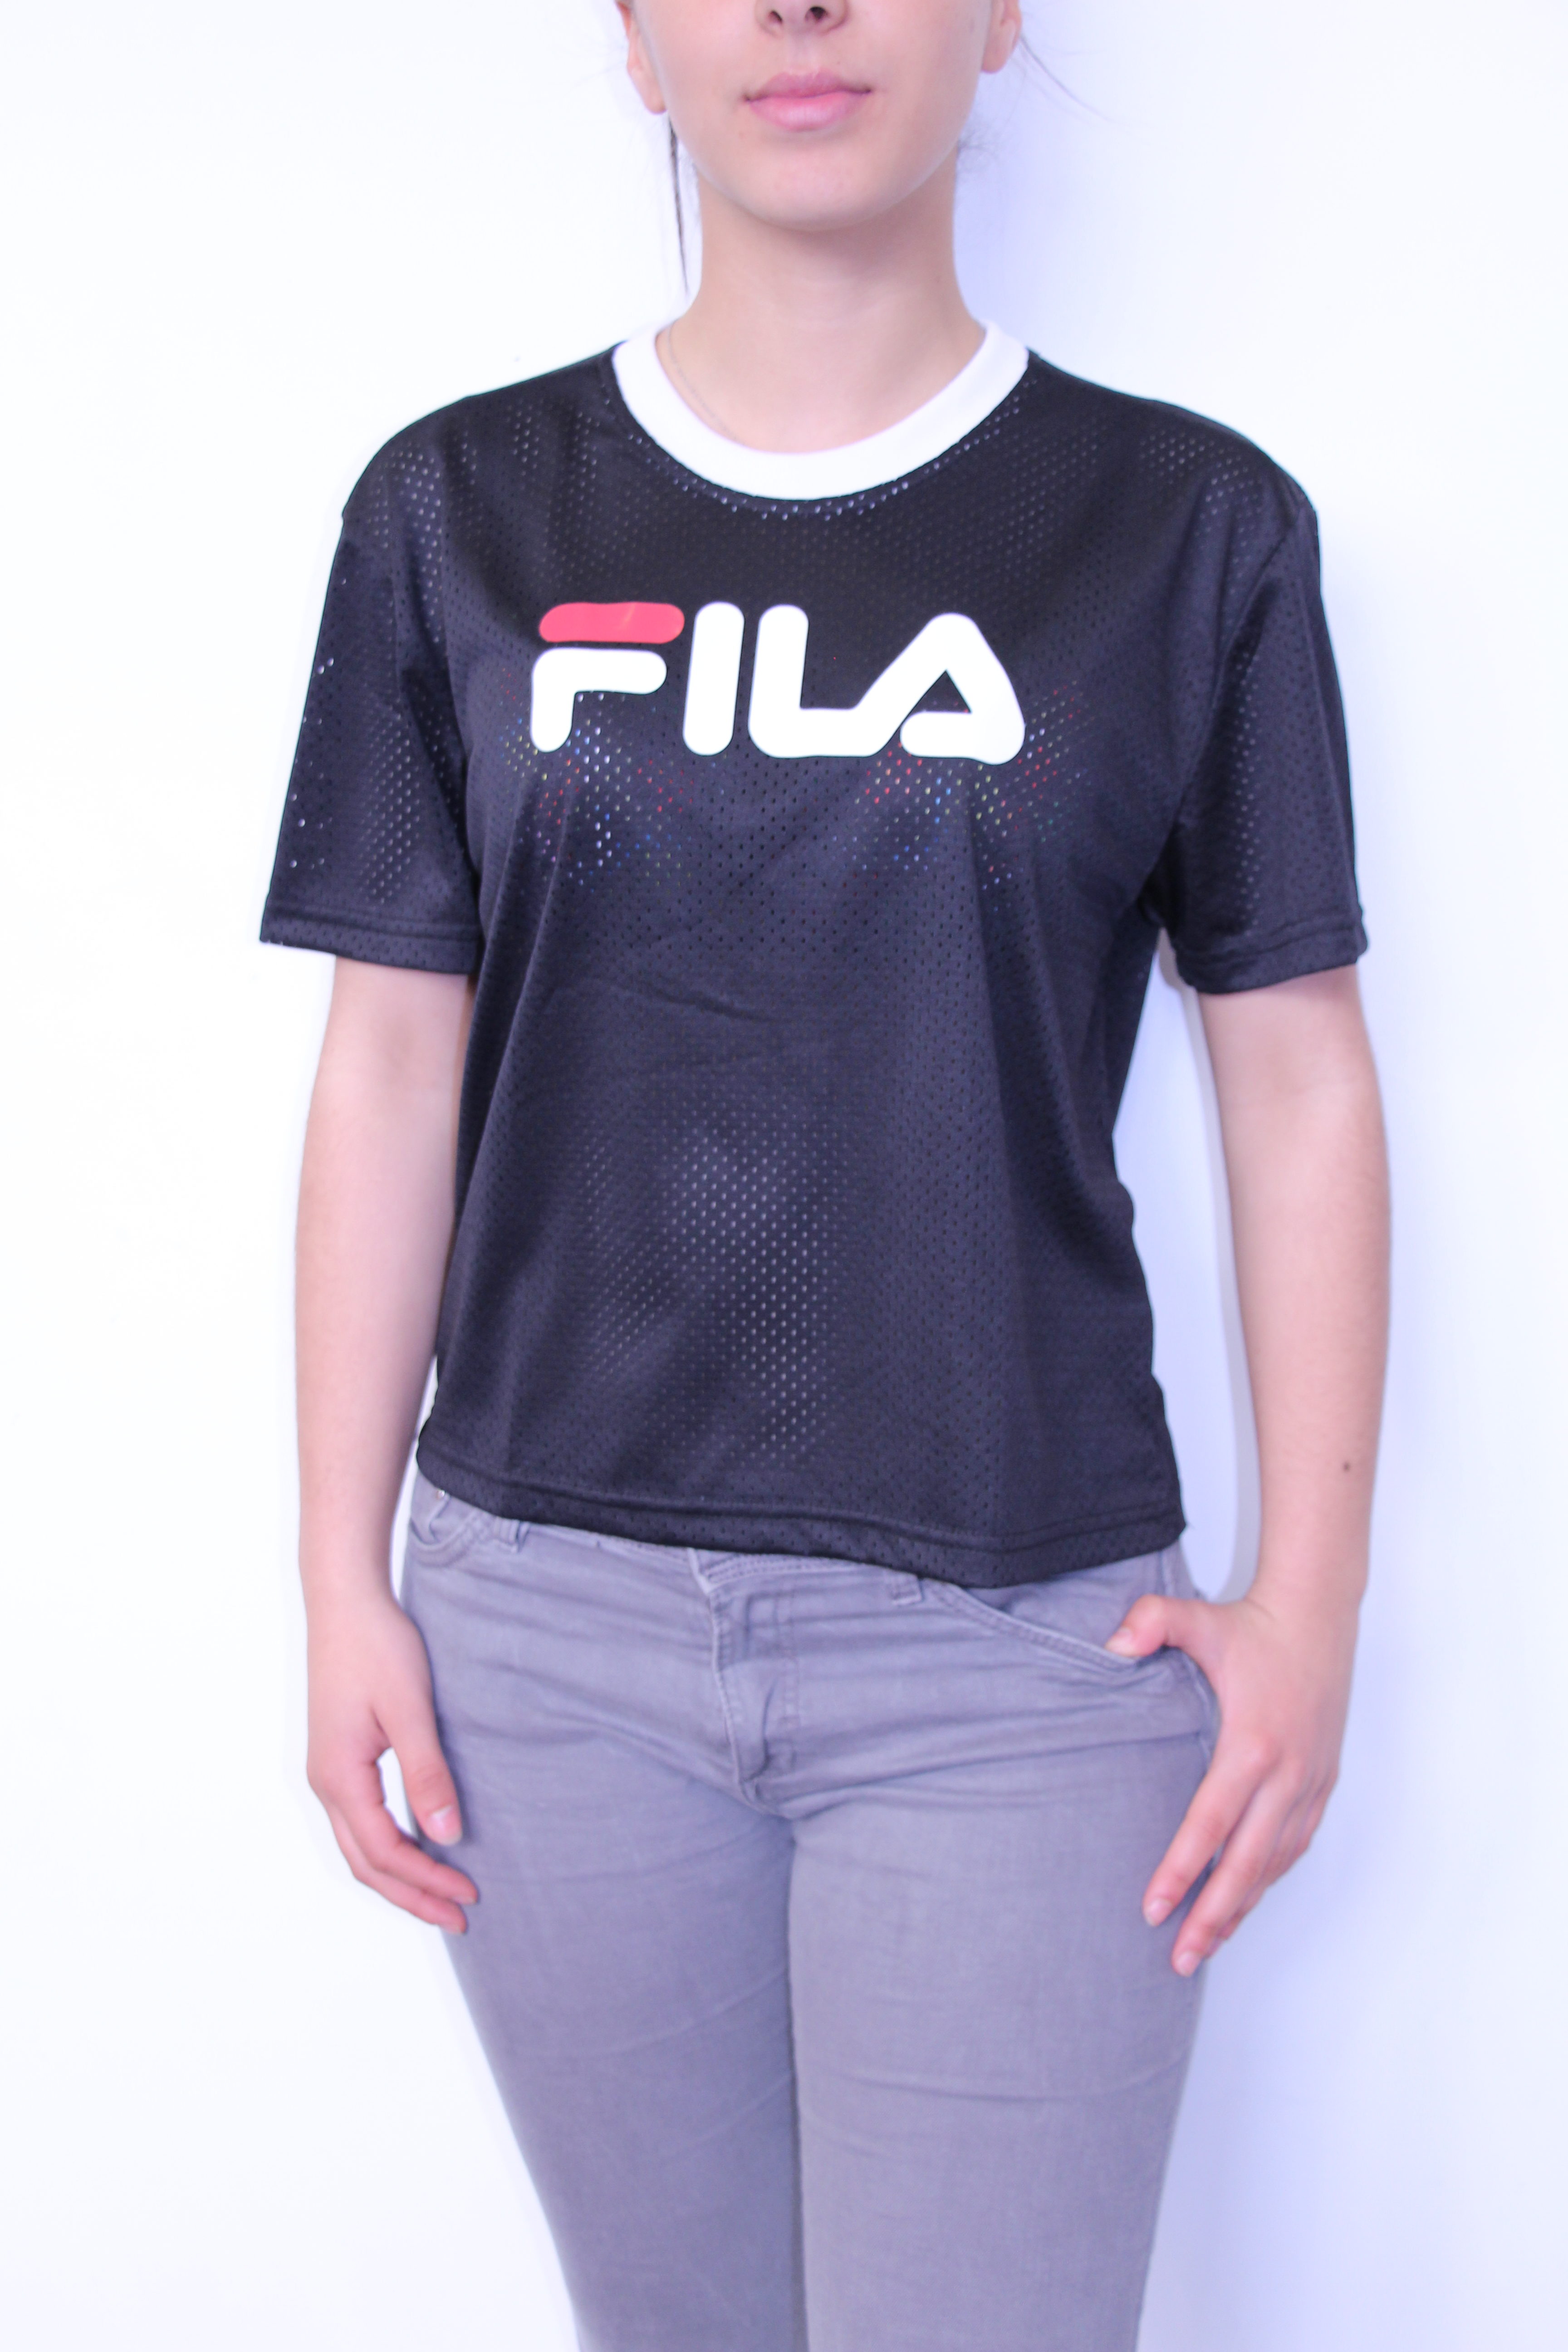 Buy > tee shirt fila fille > in stock